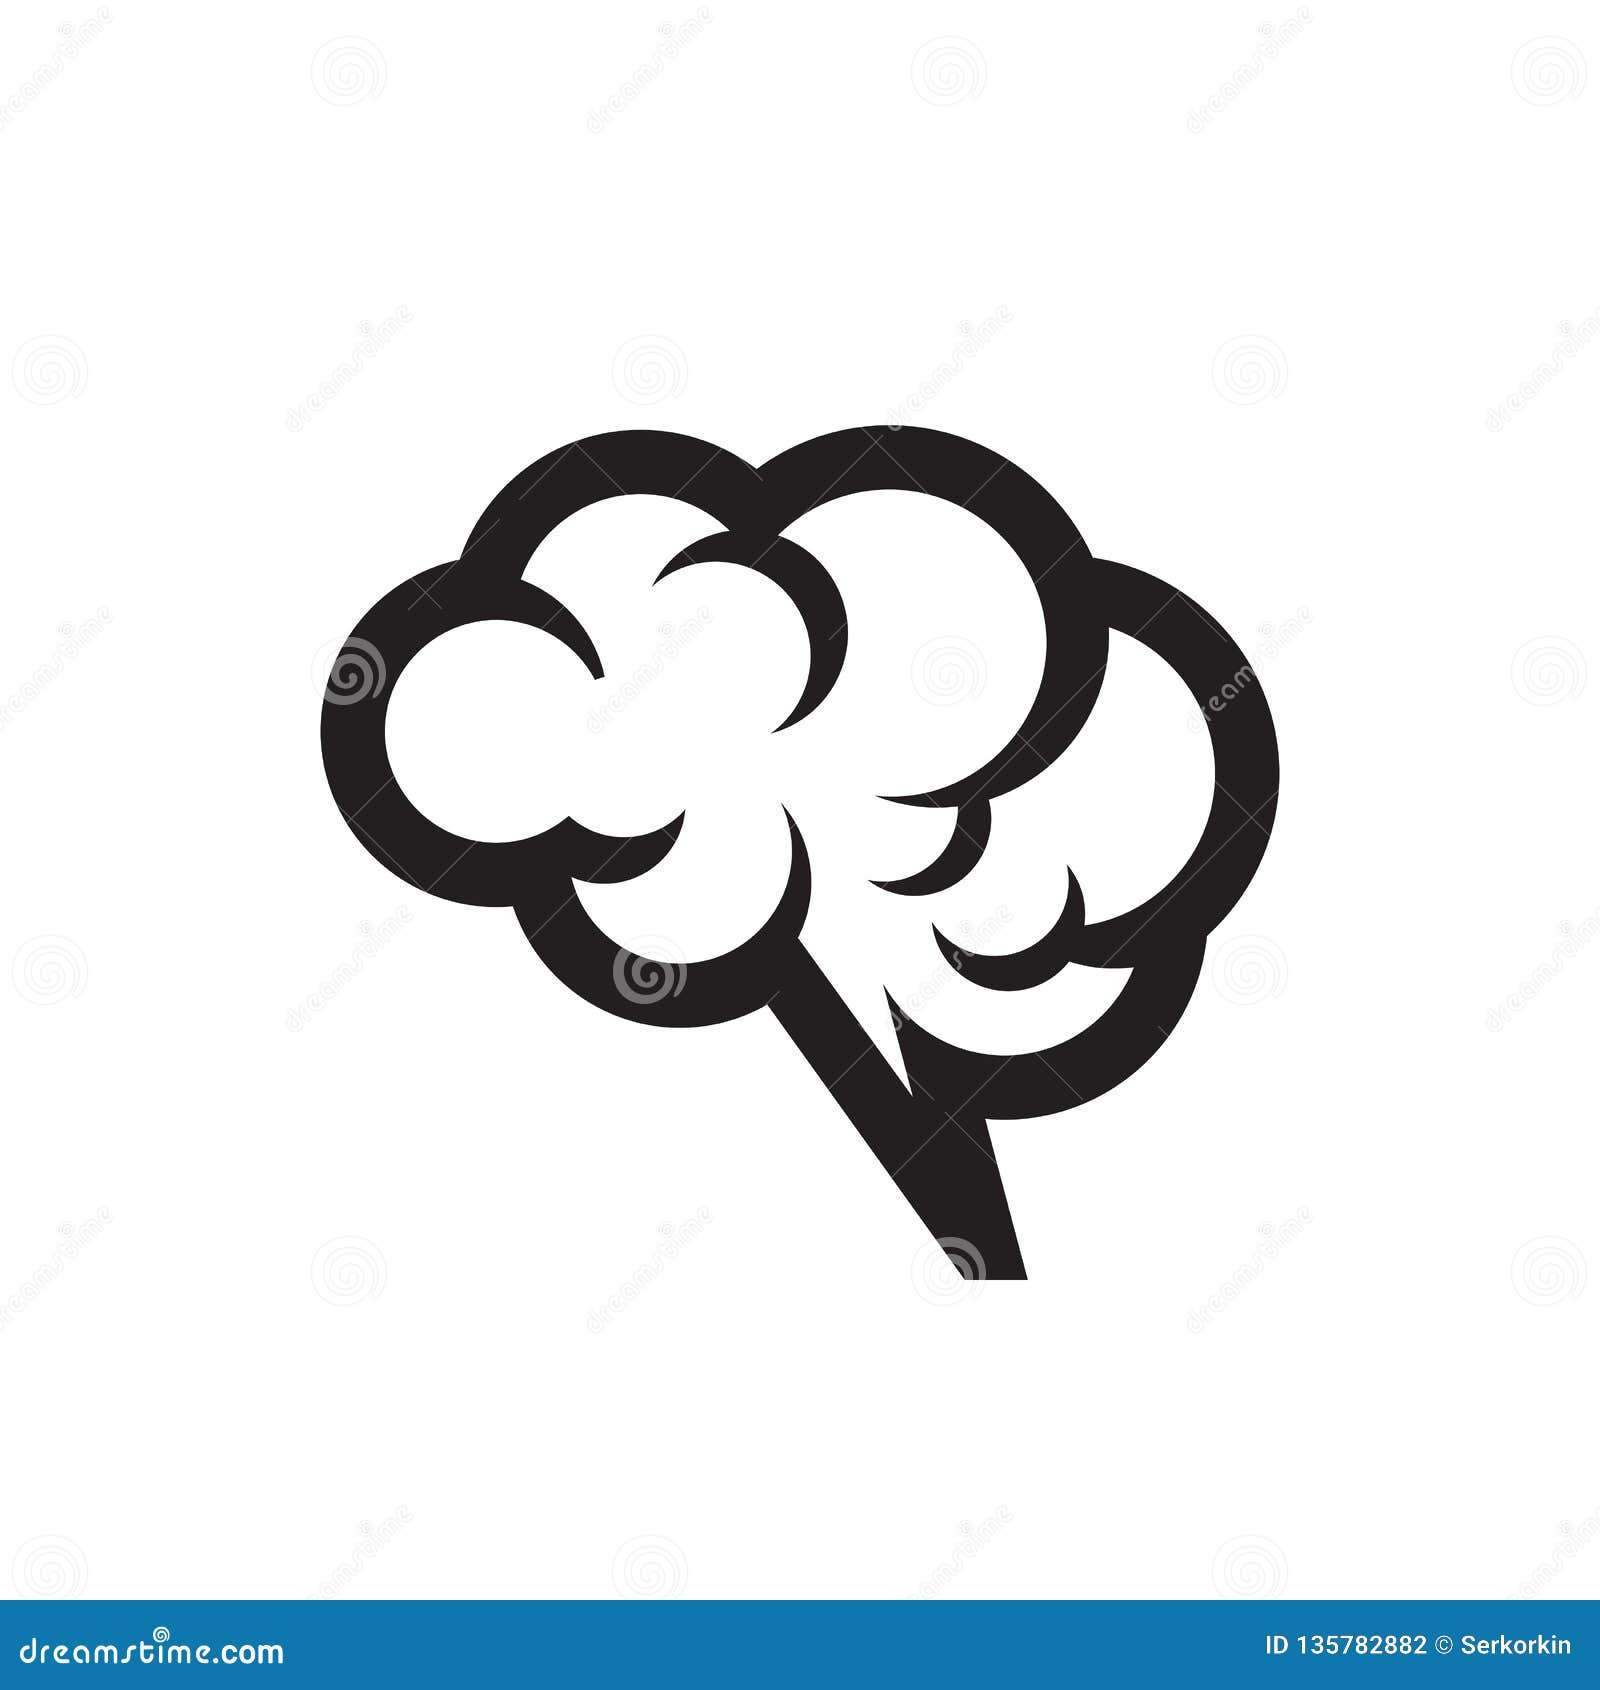 Human Brain - Black Icon On White Background Vector Illustration For